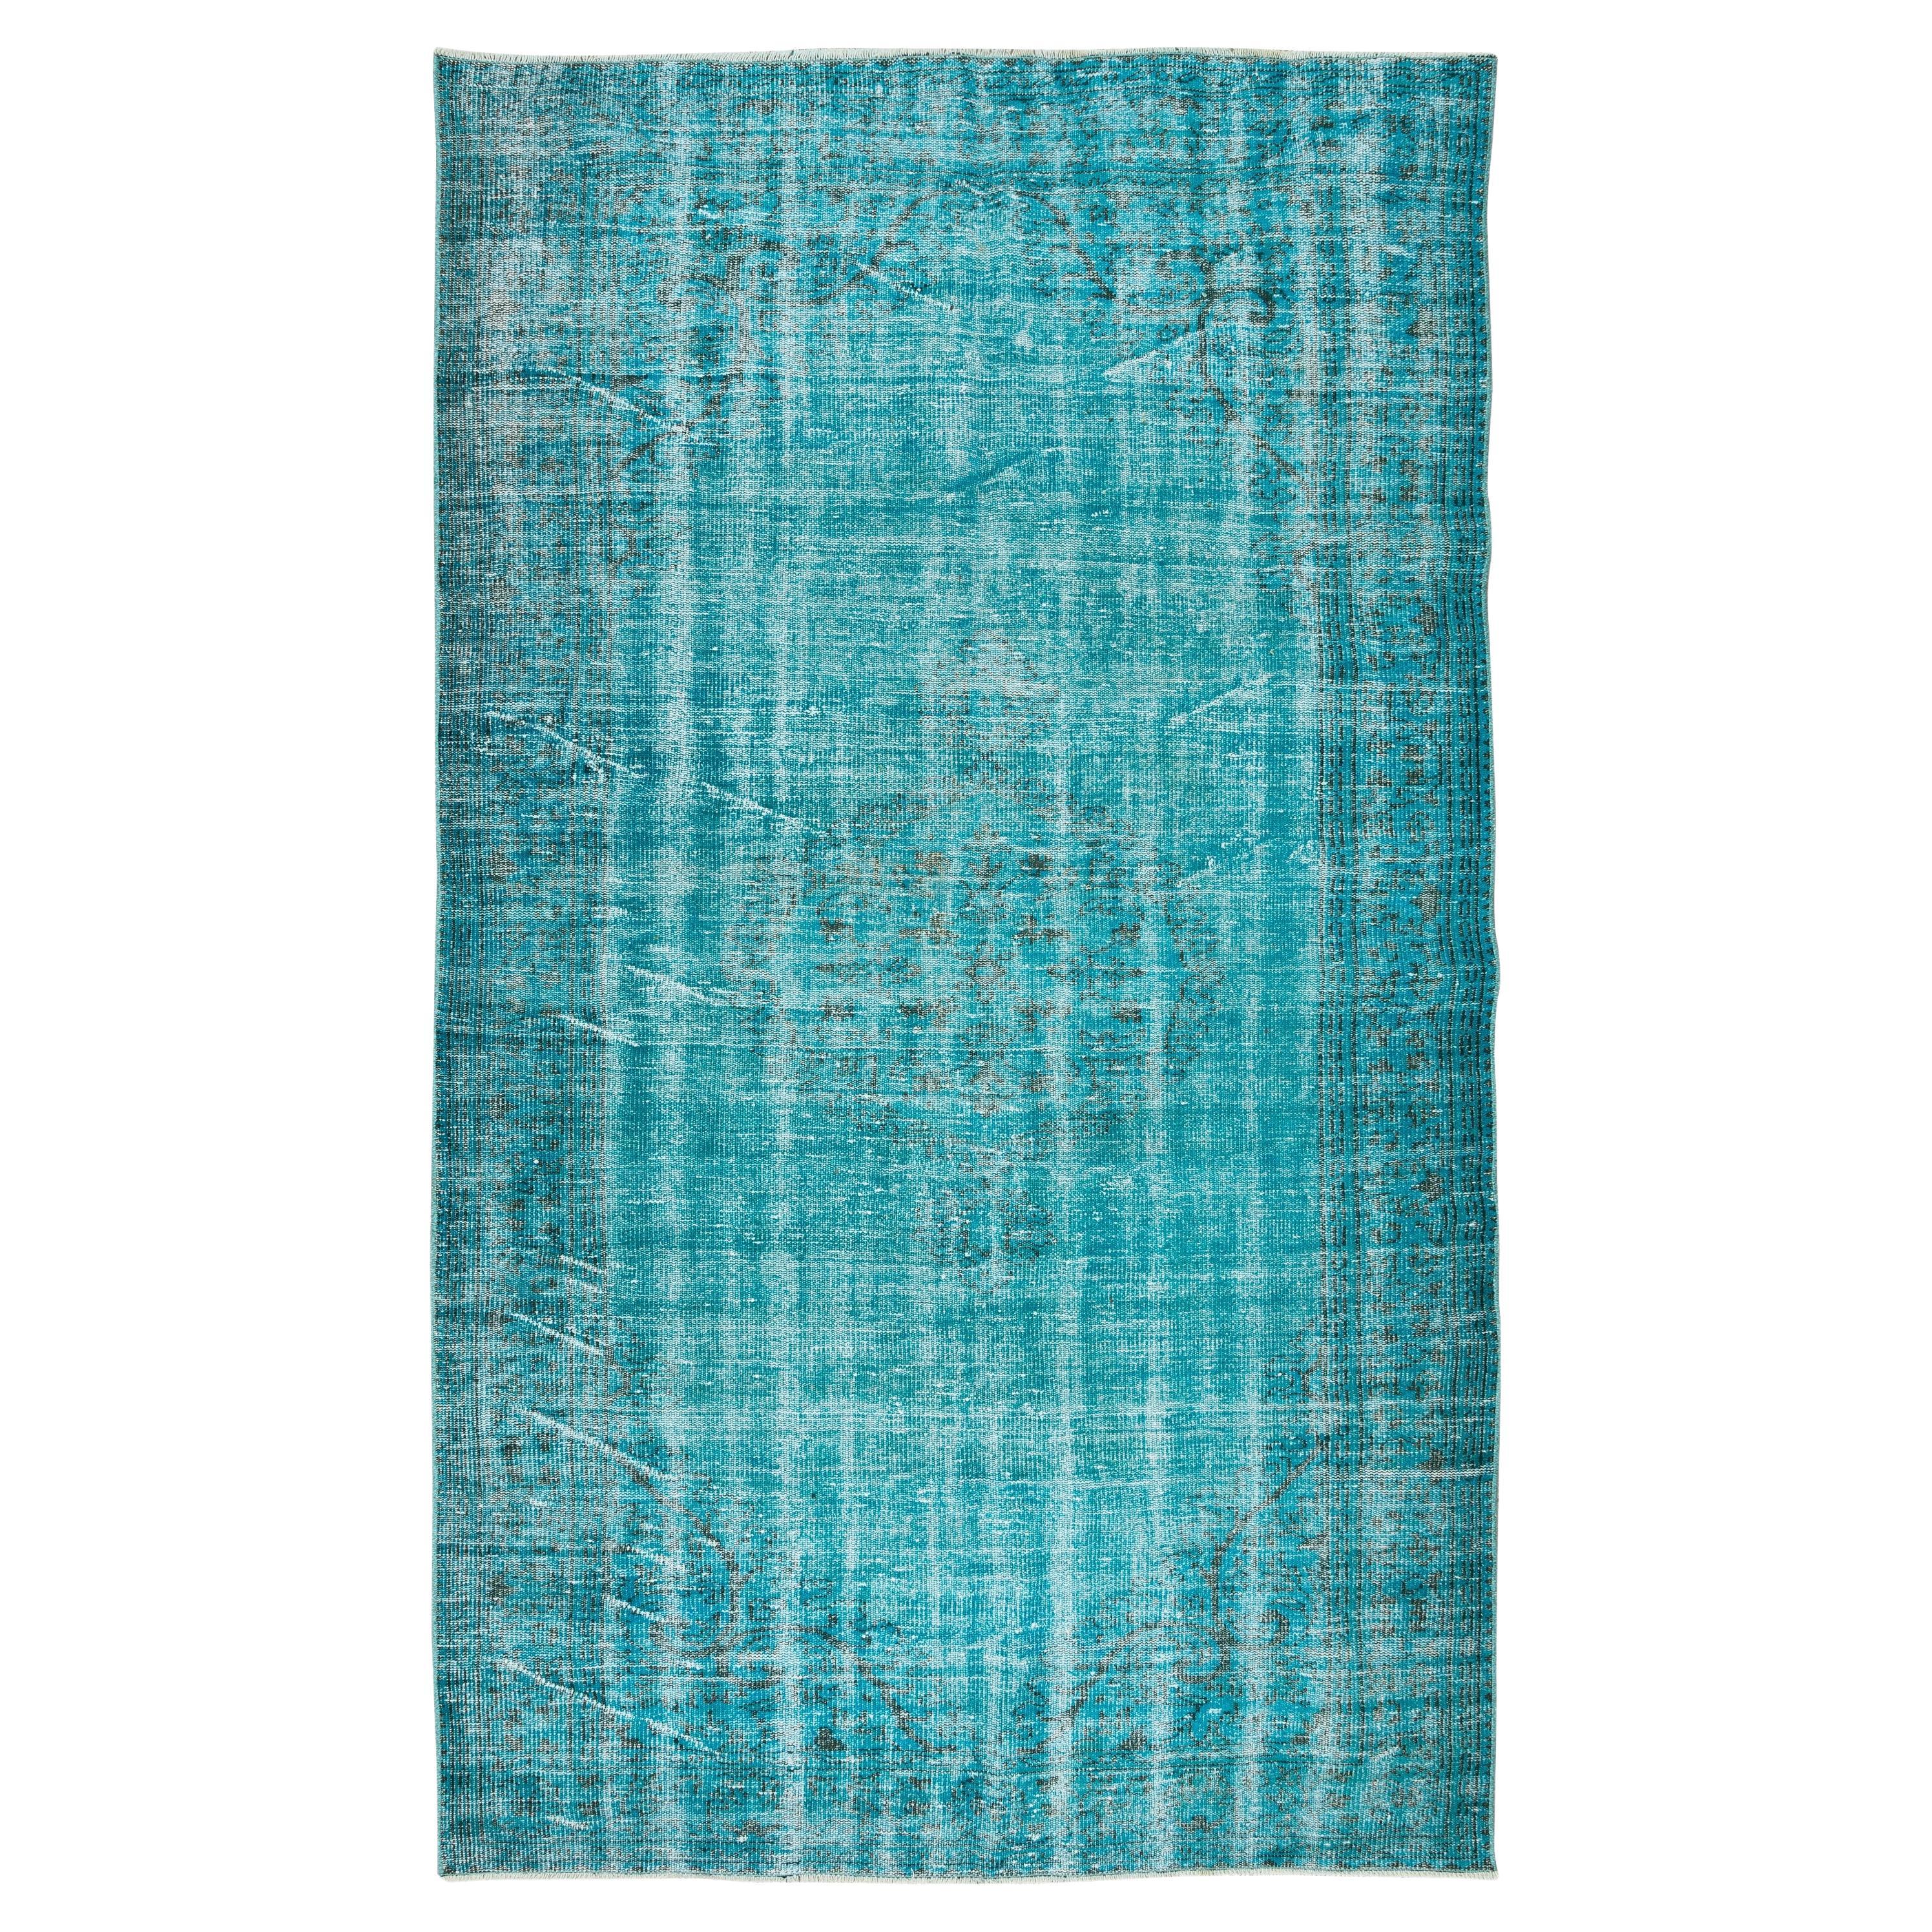 5.6x10 Ft Teal Blue Area Rug for Modern Interiors, Handmade Turkish Carpet